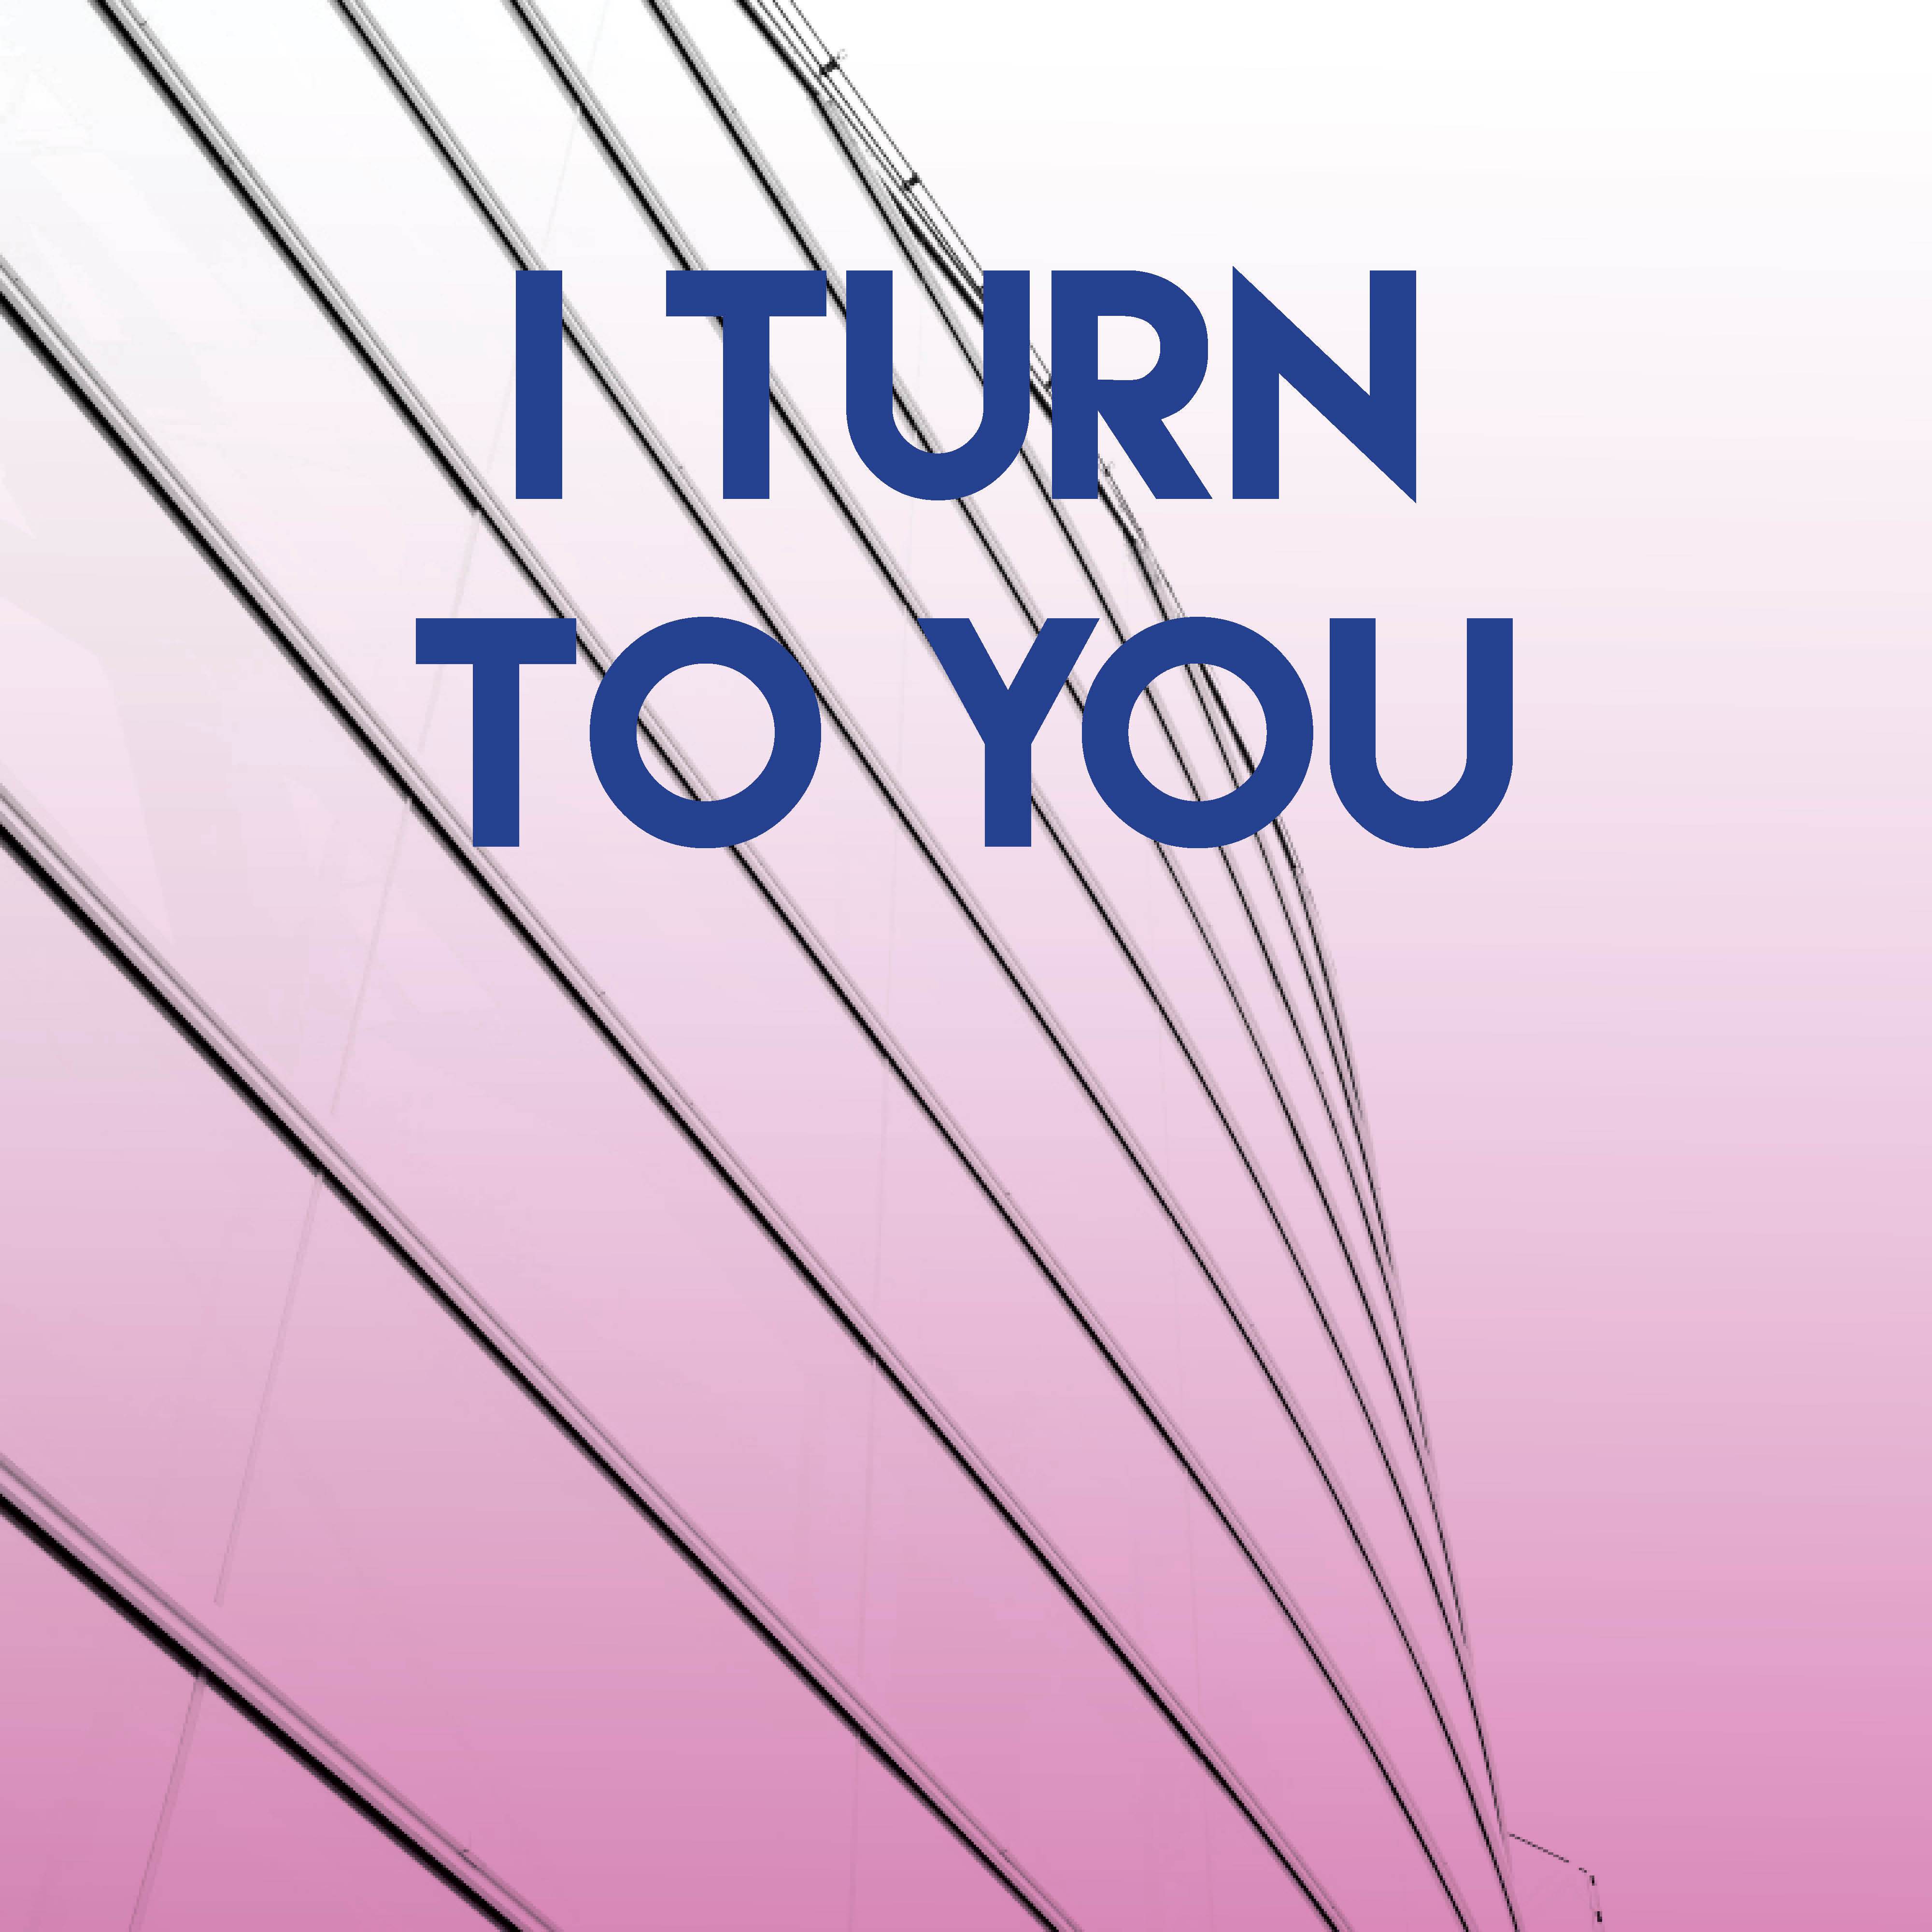 I Turn to You